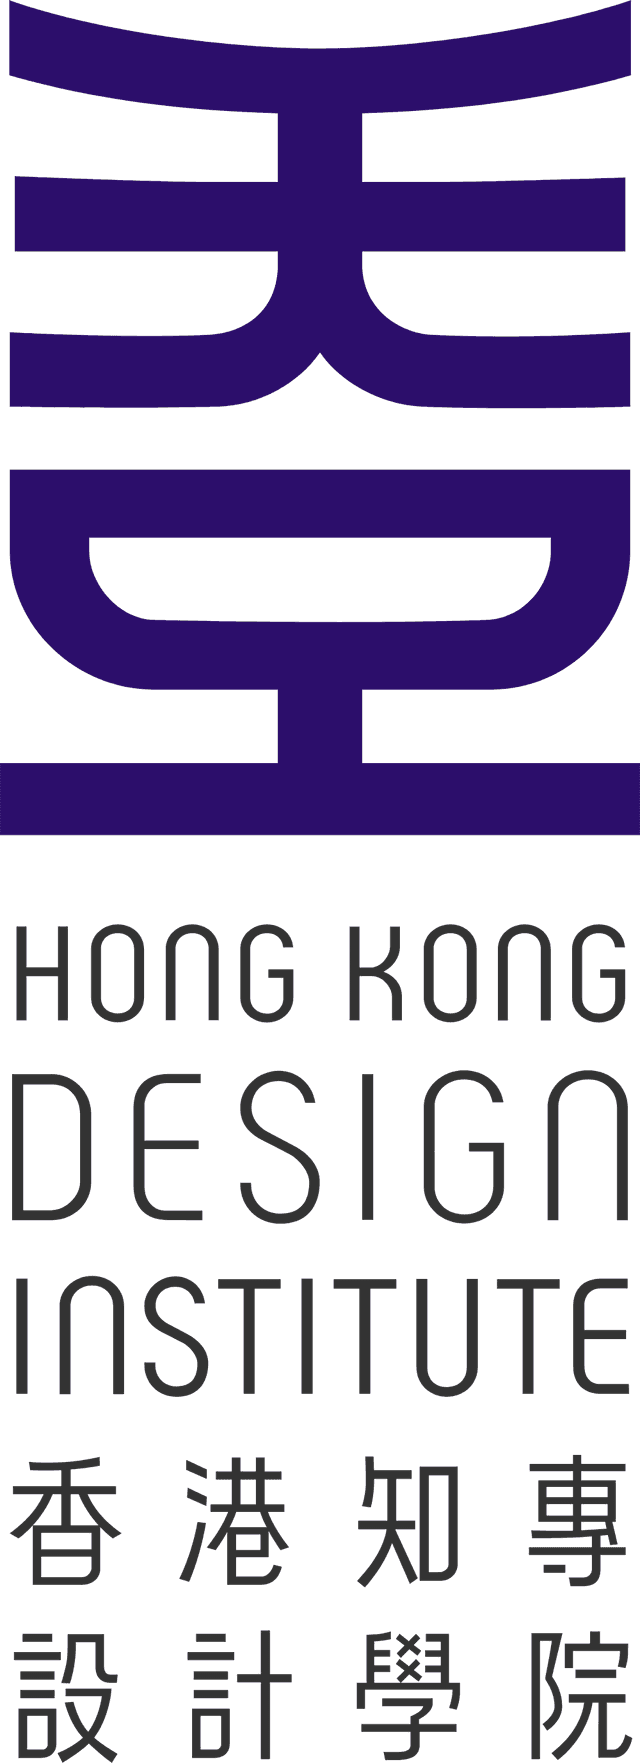 Hong Kong Design Institute Logo download